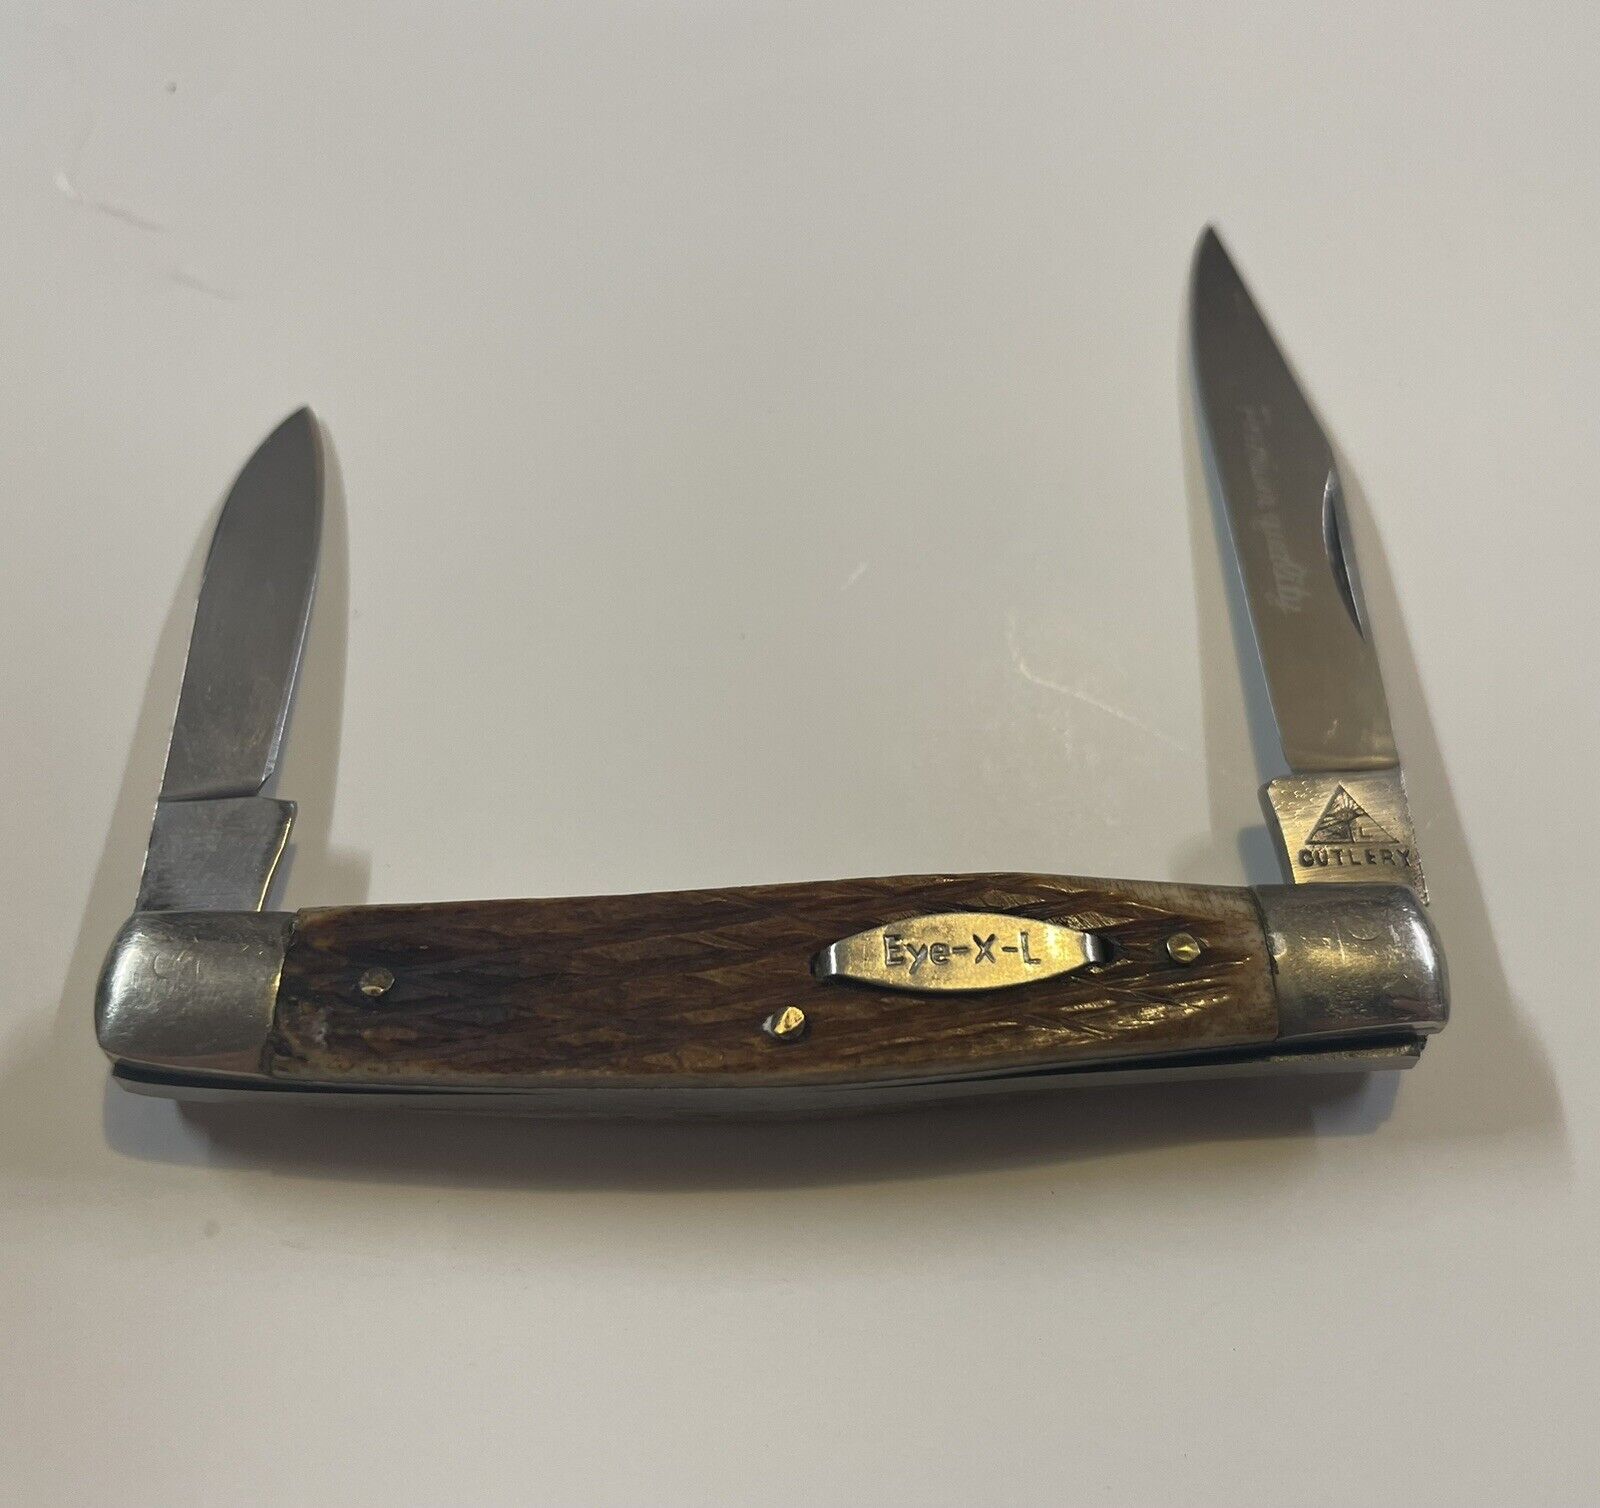 Eye XL Cutlery (Schlieper) Japan Half Stockman Knife 1960s 